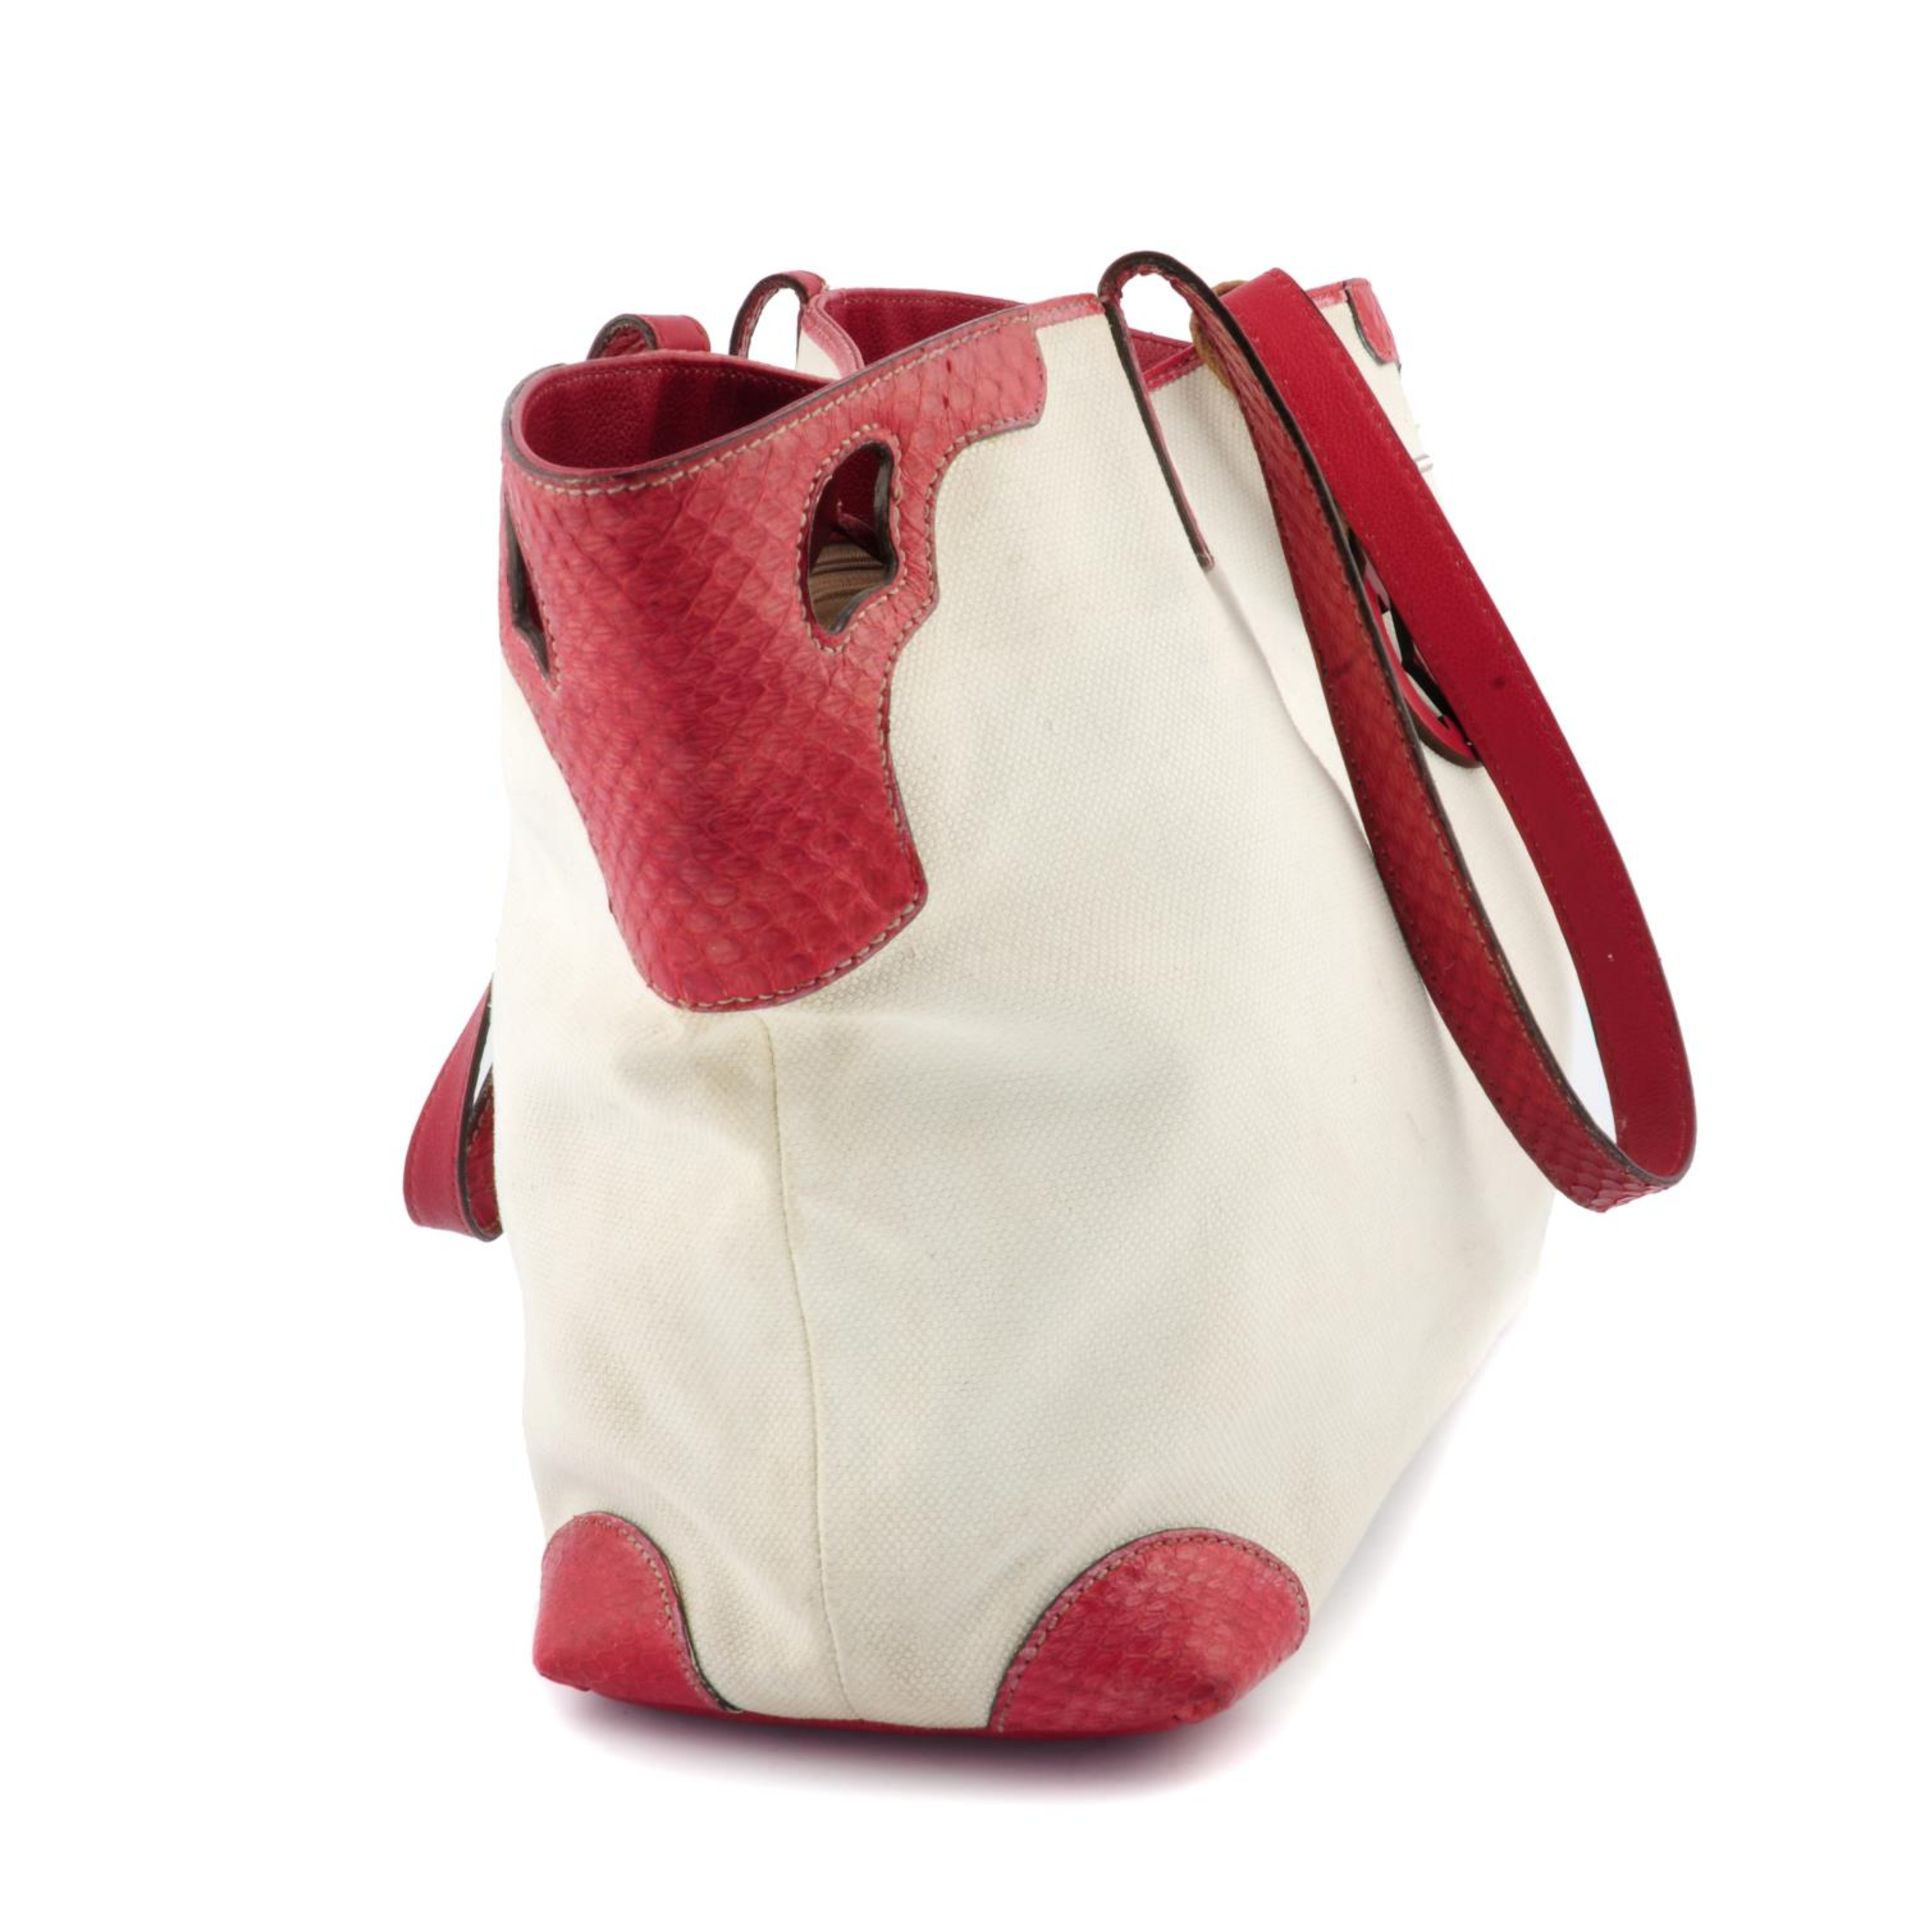 CARTIER - a white and red Marcello de Cartier handbag. - Image 3 of 4